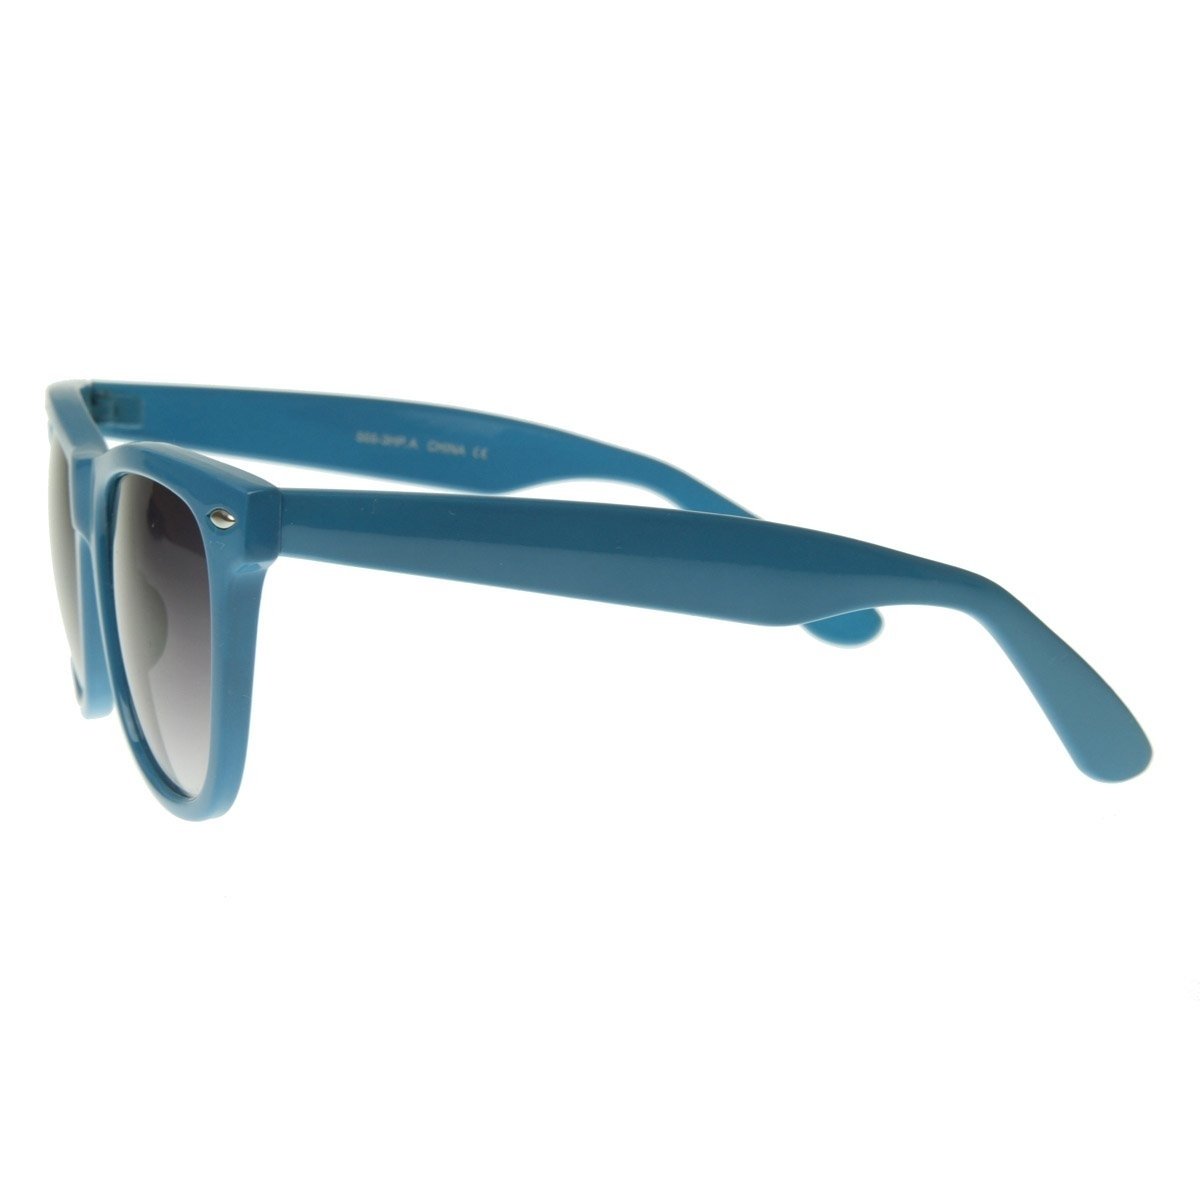 Large Classic Color Horn Rimmed Bright Retro Style Sunglasses - White